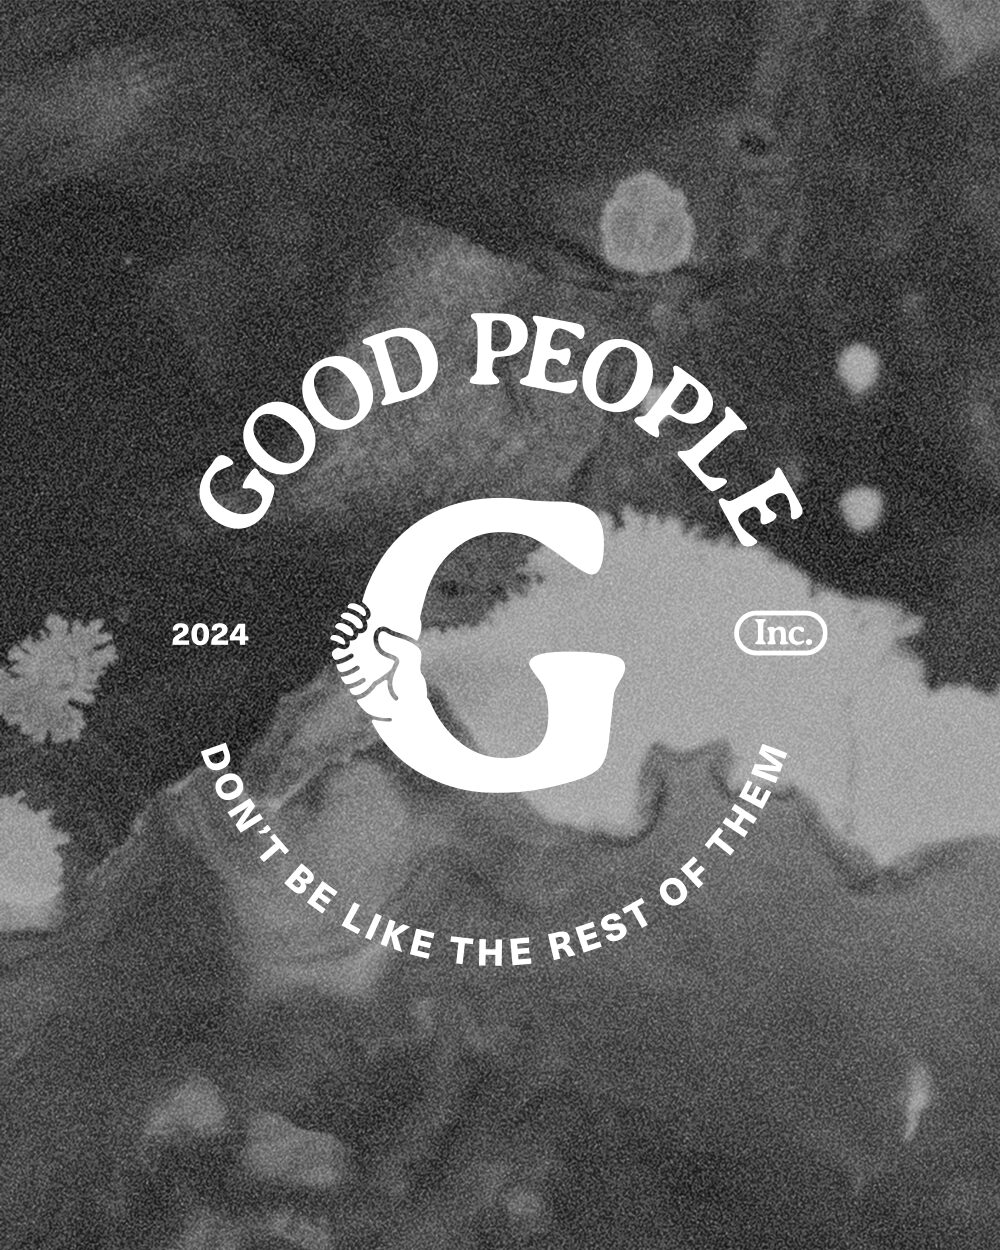 GOOD PEOPLE Inc.